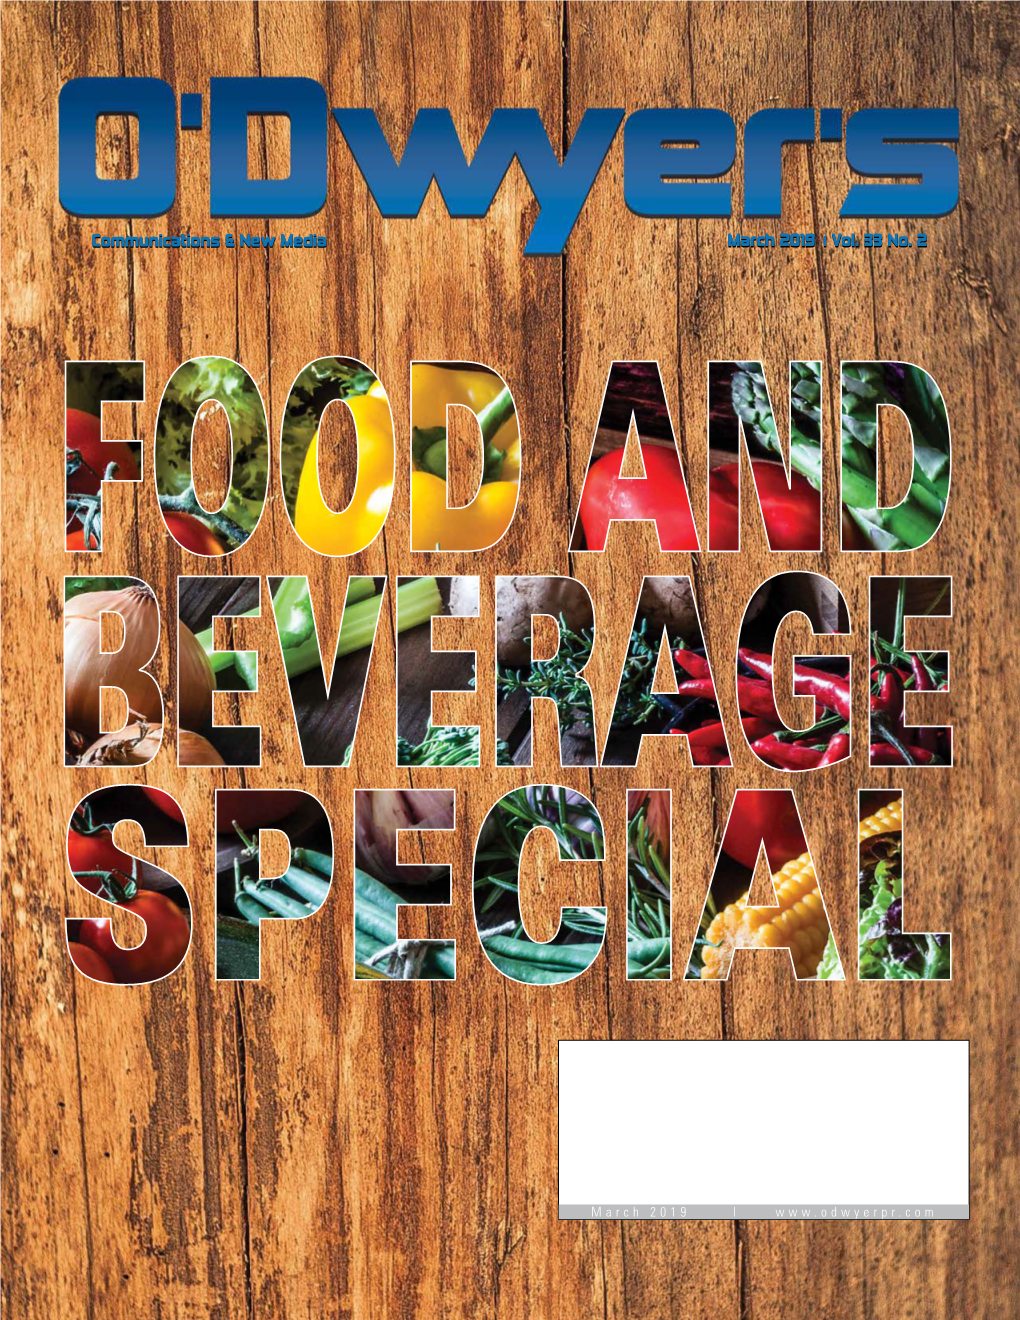 O'dwyer's Mar. '19 Food & Beverage PR Magazine